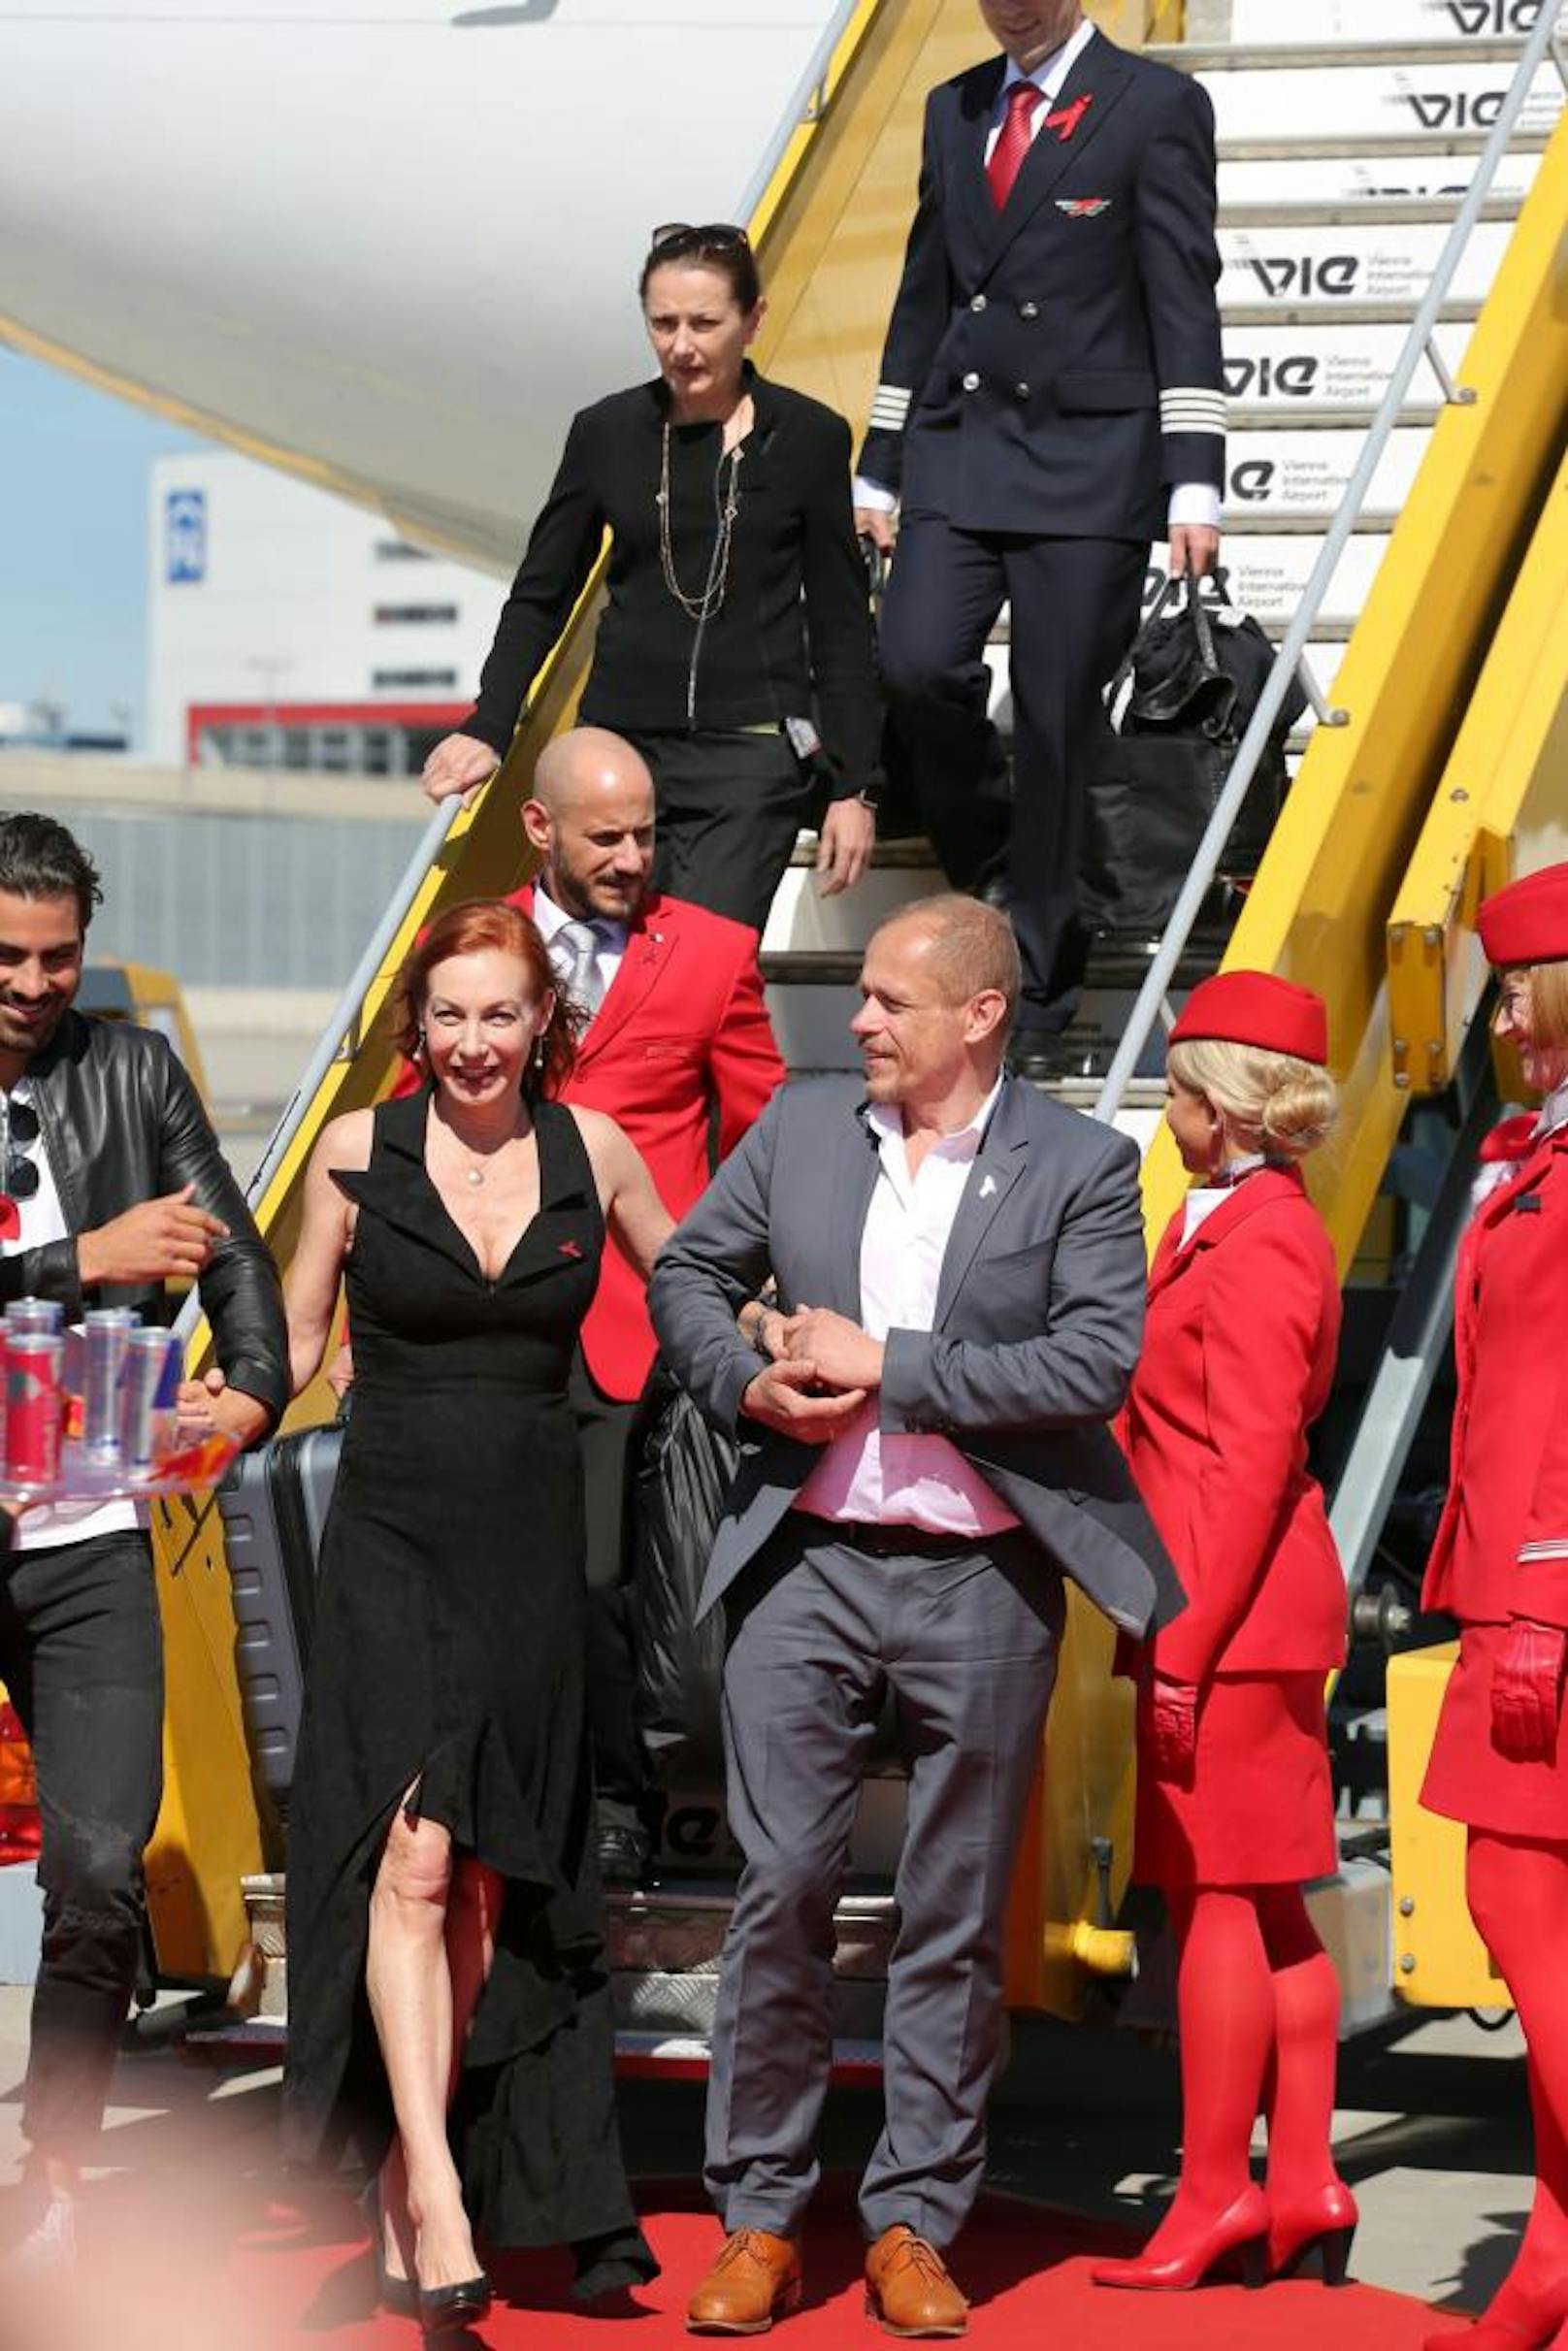 Die Ankunft des Life Ball Fliegers am Flughafen Wien am 9. Juni 2017